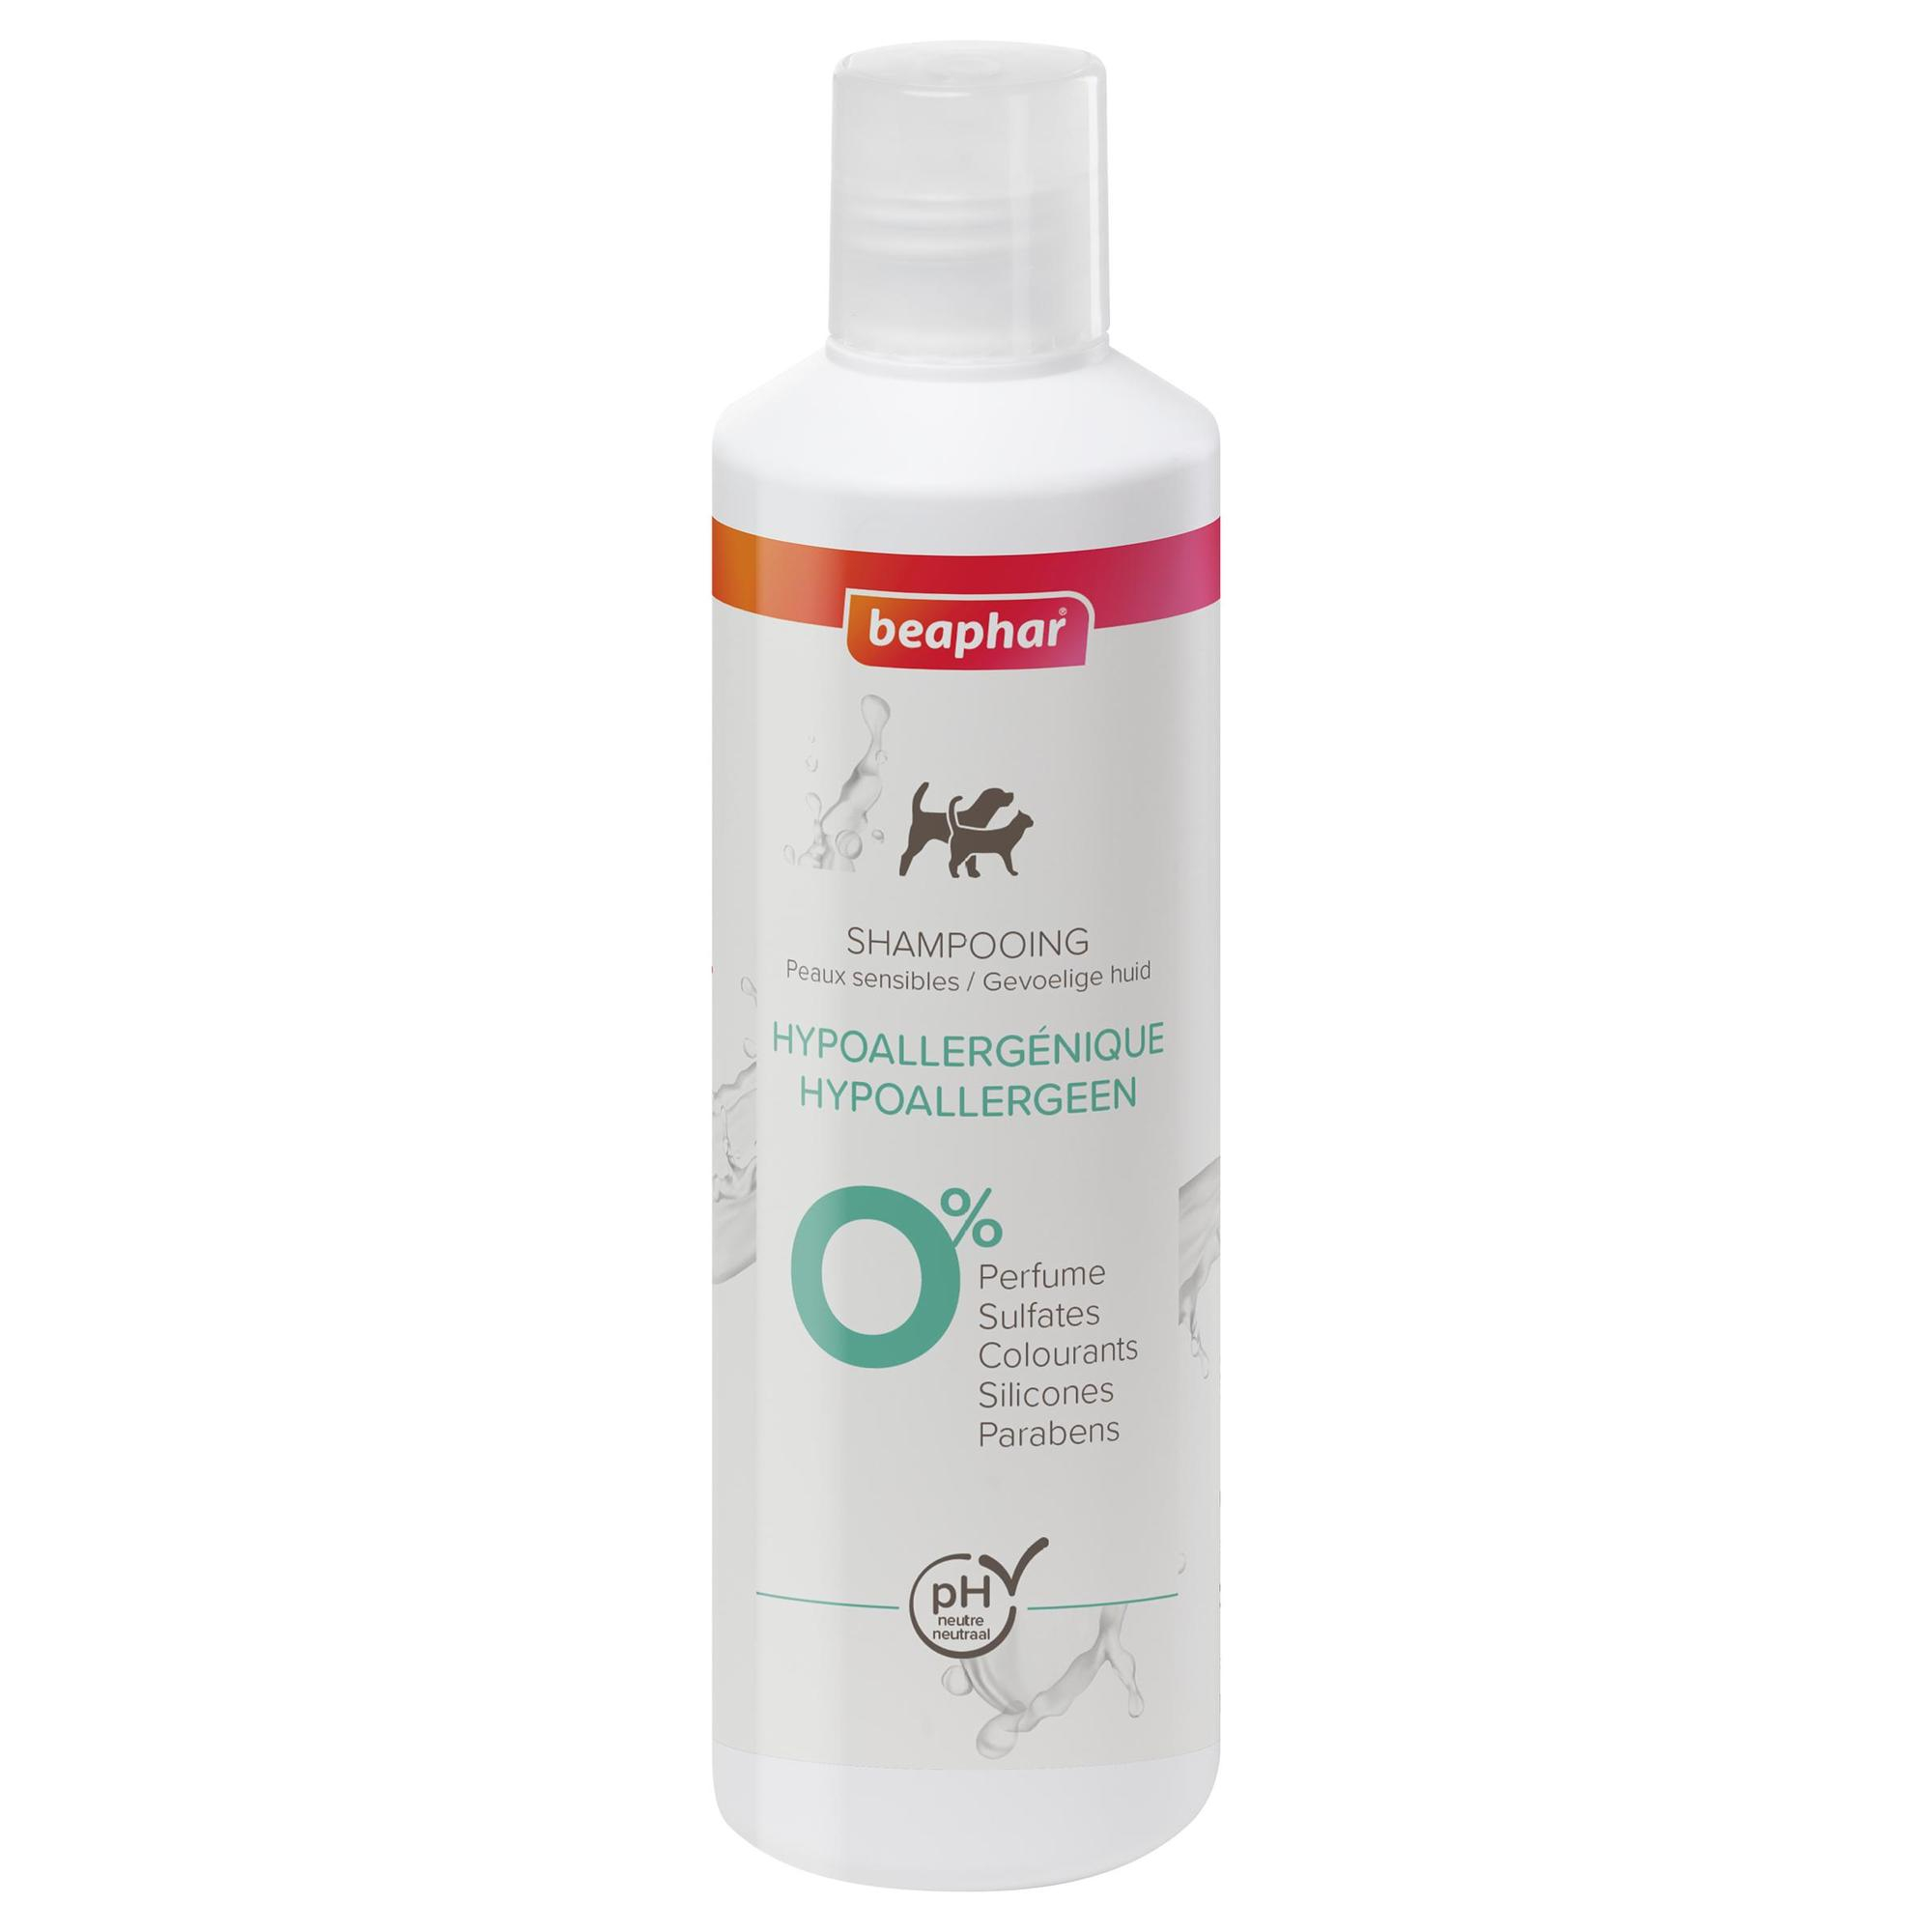 Beaphar - Shampooing Hypoallergénique per cane & gatto - Gamma ESPERTI